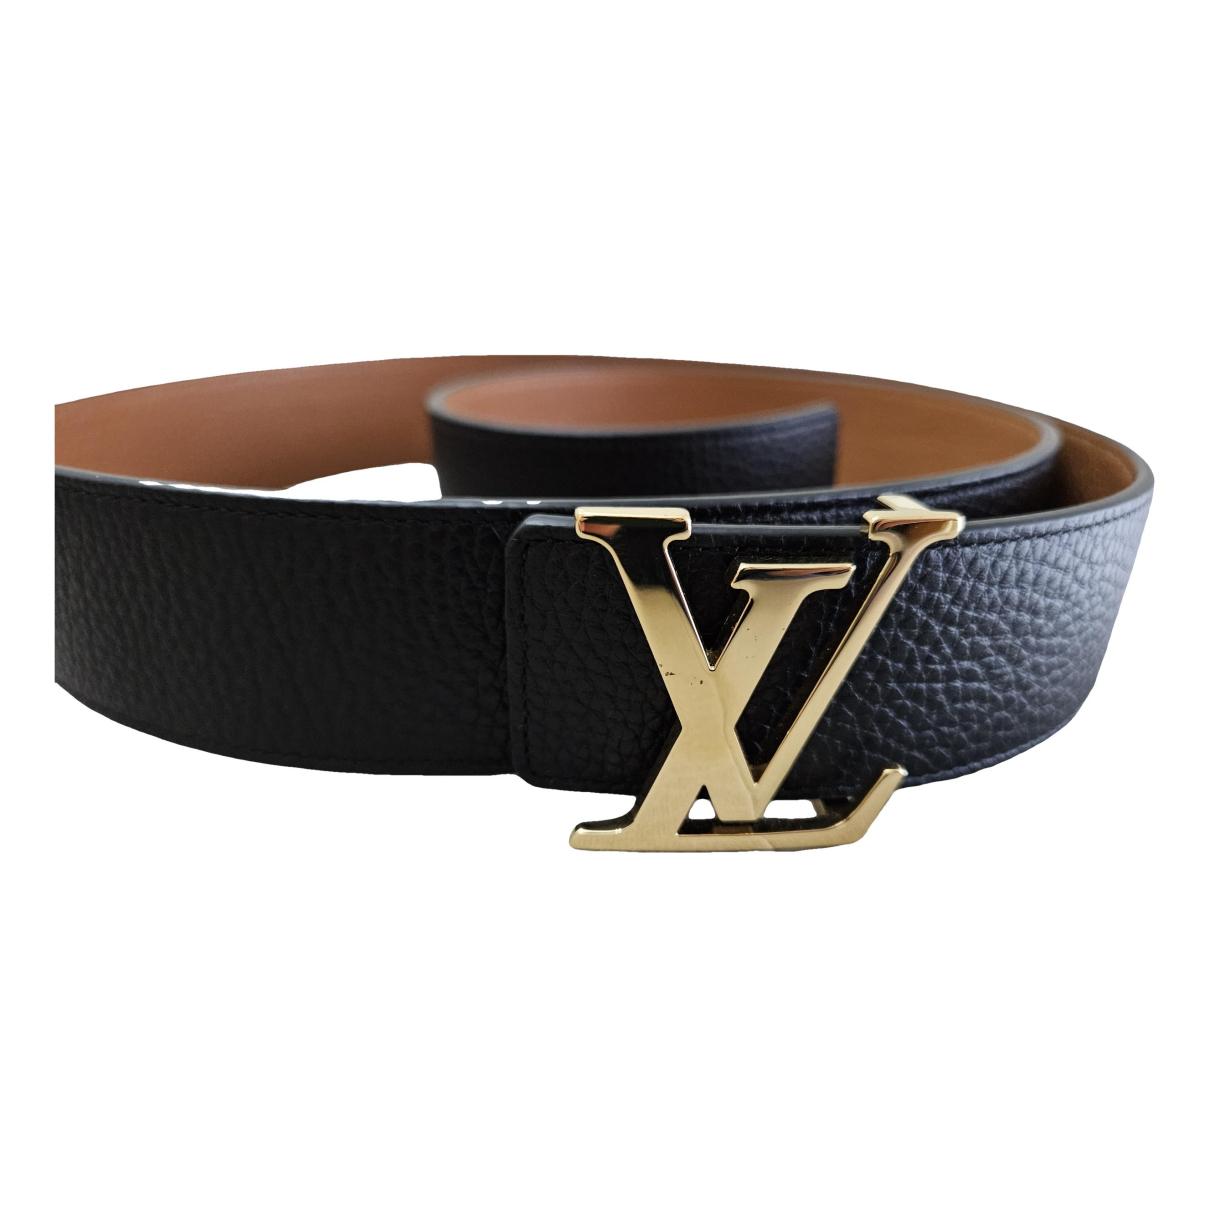 Cinturones Louis Vuitton de color negro para Hombre - Vestiaire Collective